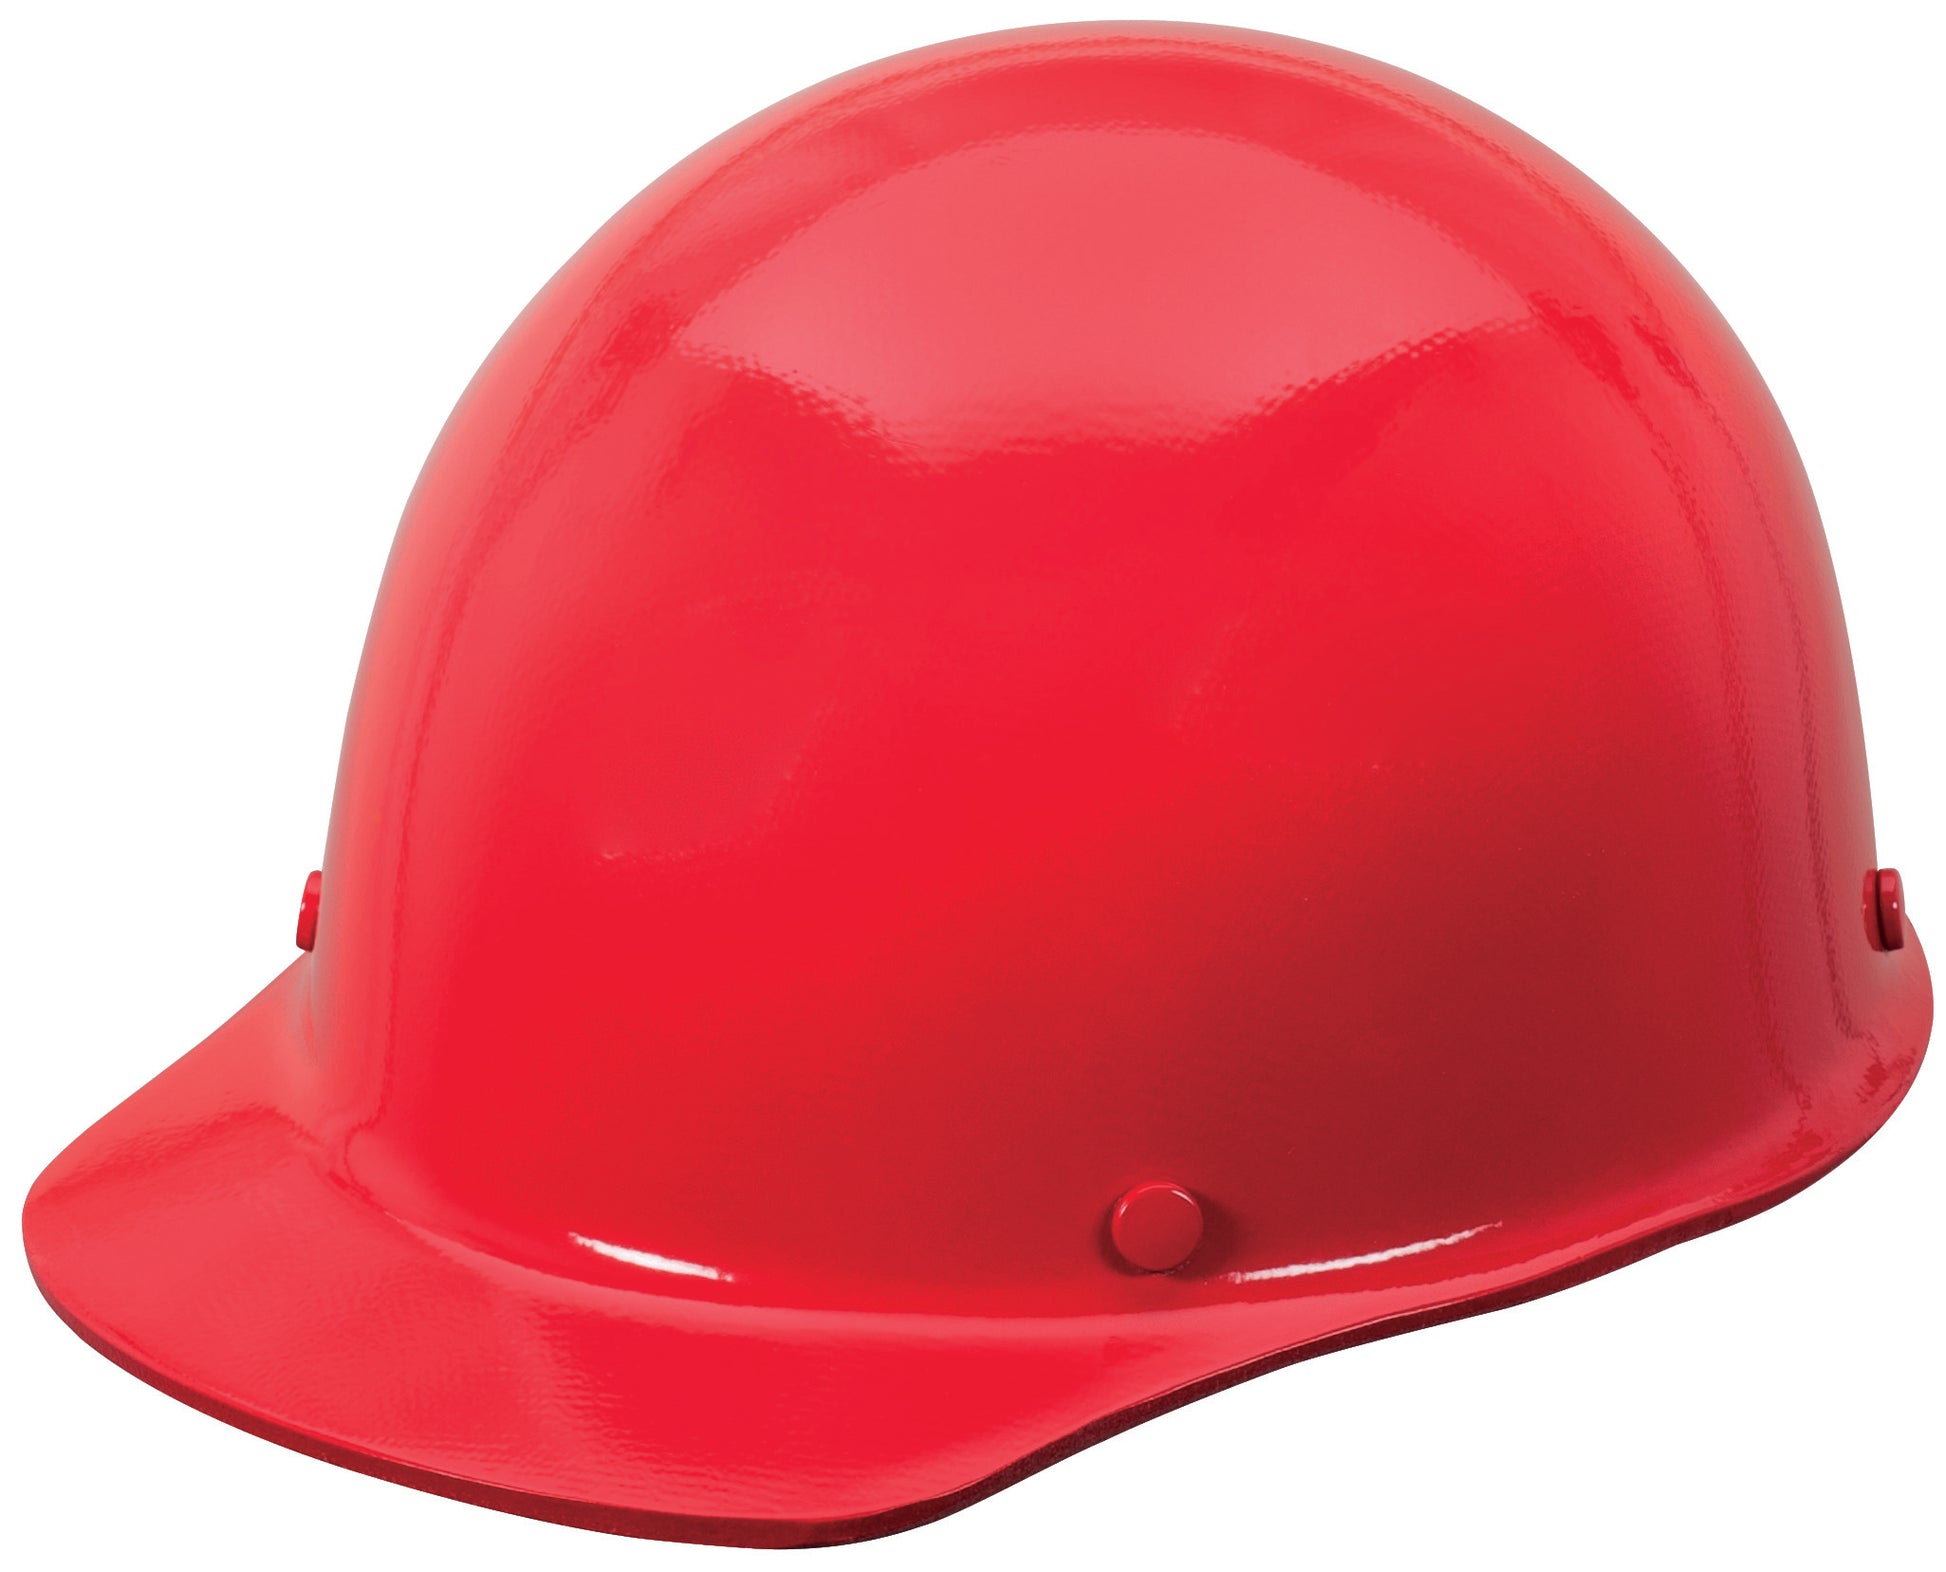 Skullgard Protective Cap, Red - w/ Staz-On Suspension, Standard